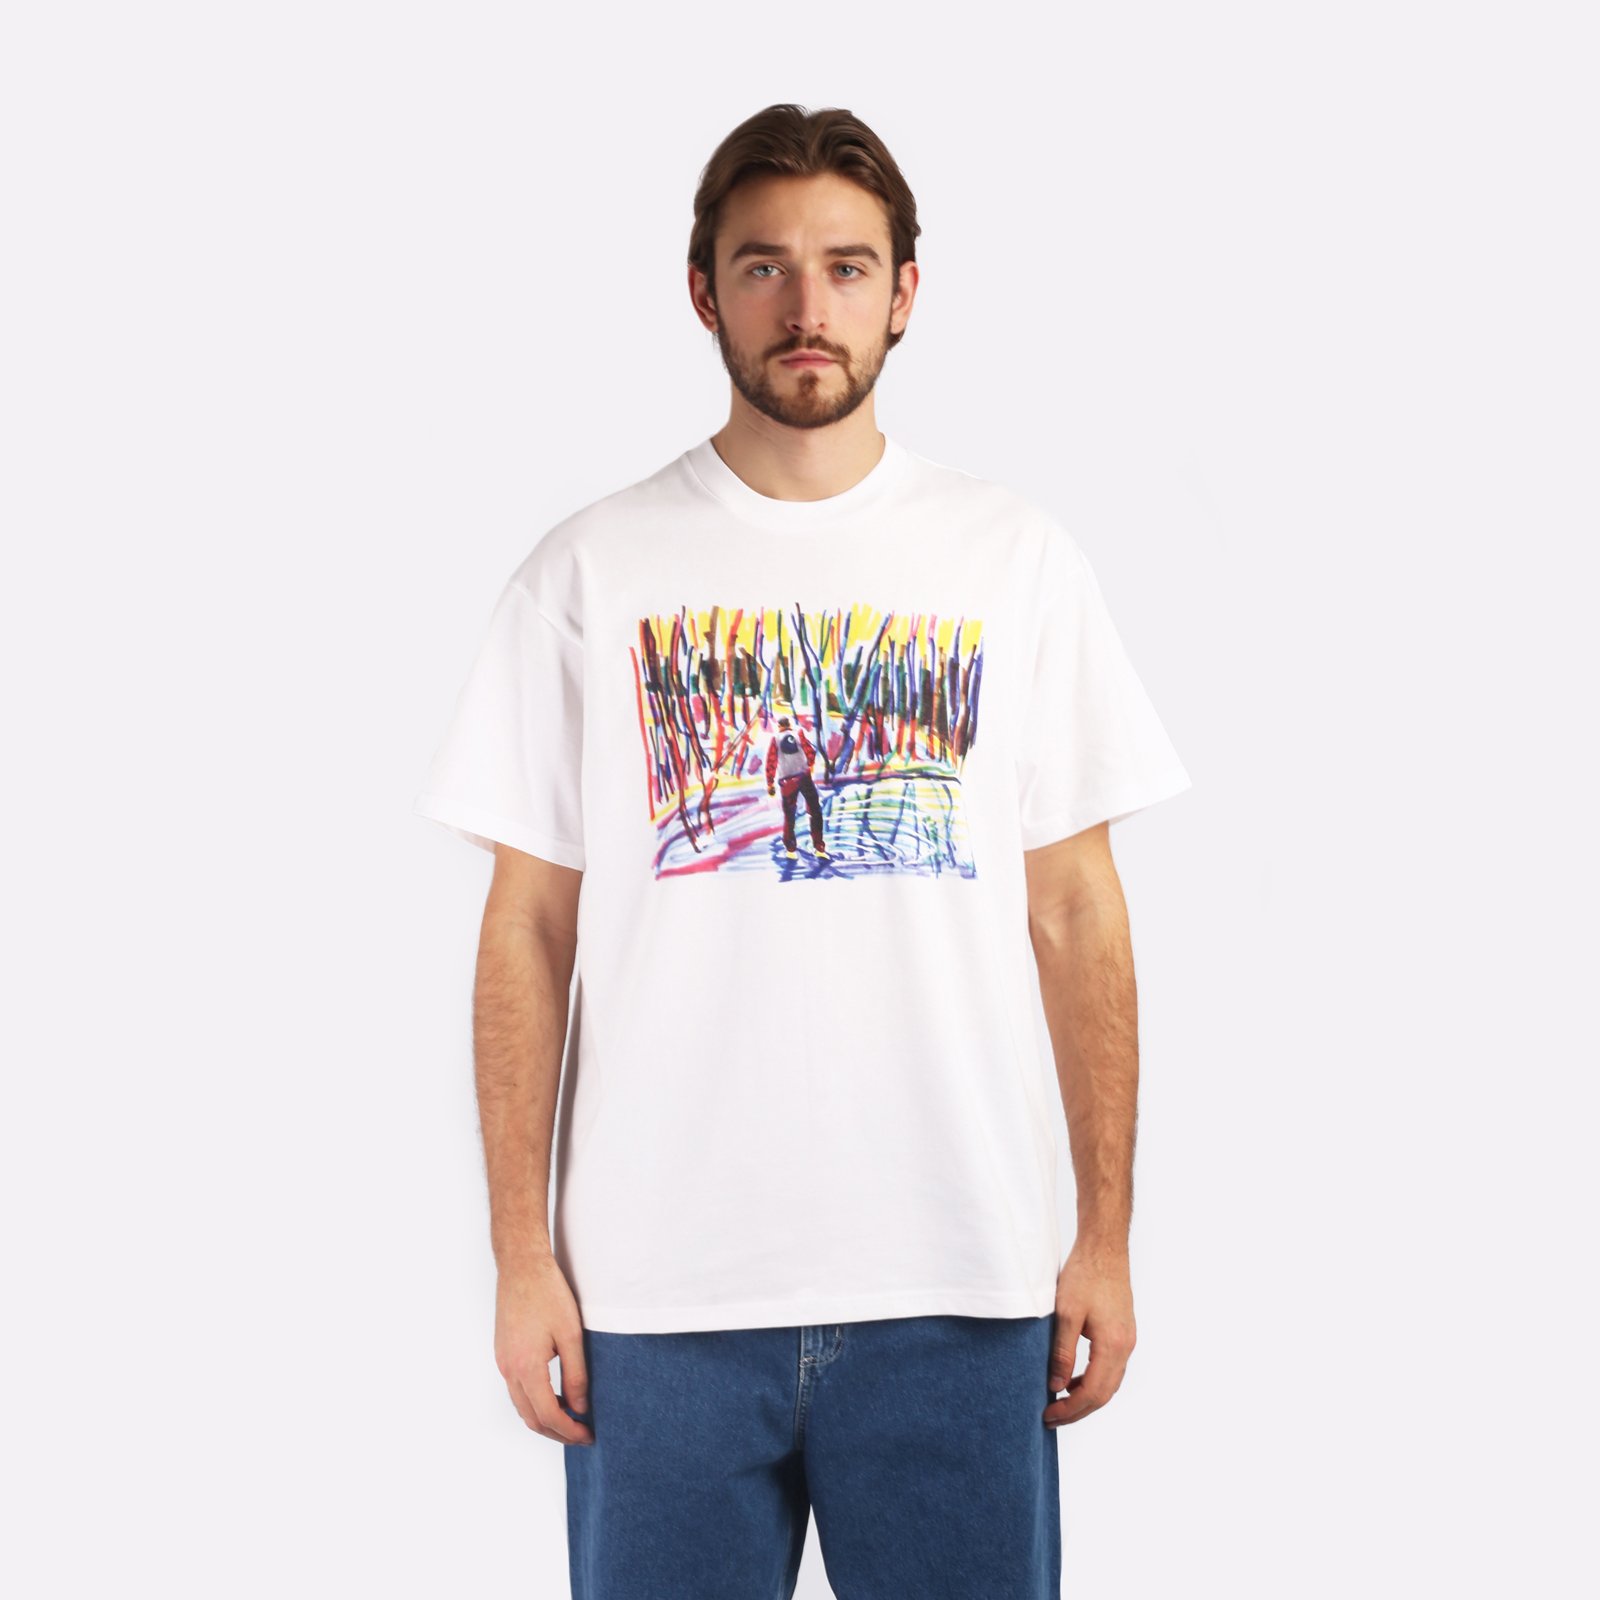 мужская футболка Carhartt WIP S/S Ollie Mac Icy Lake T-S  (I032408-white)  - цена, описание, фото 1